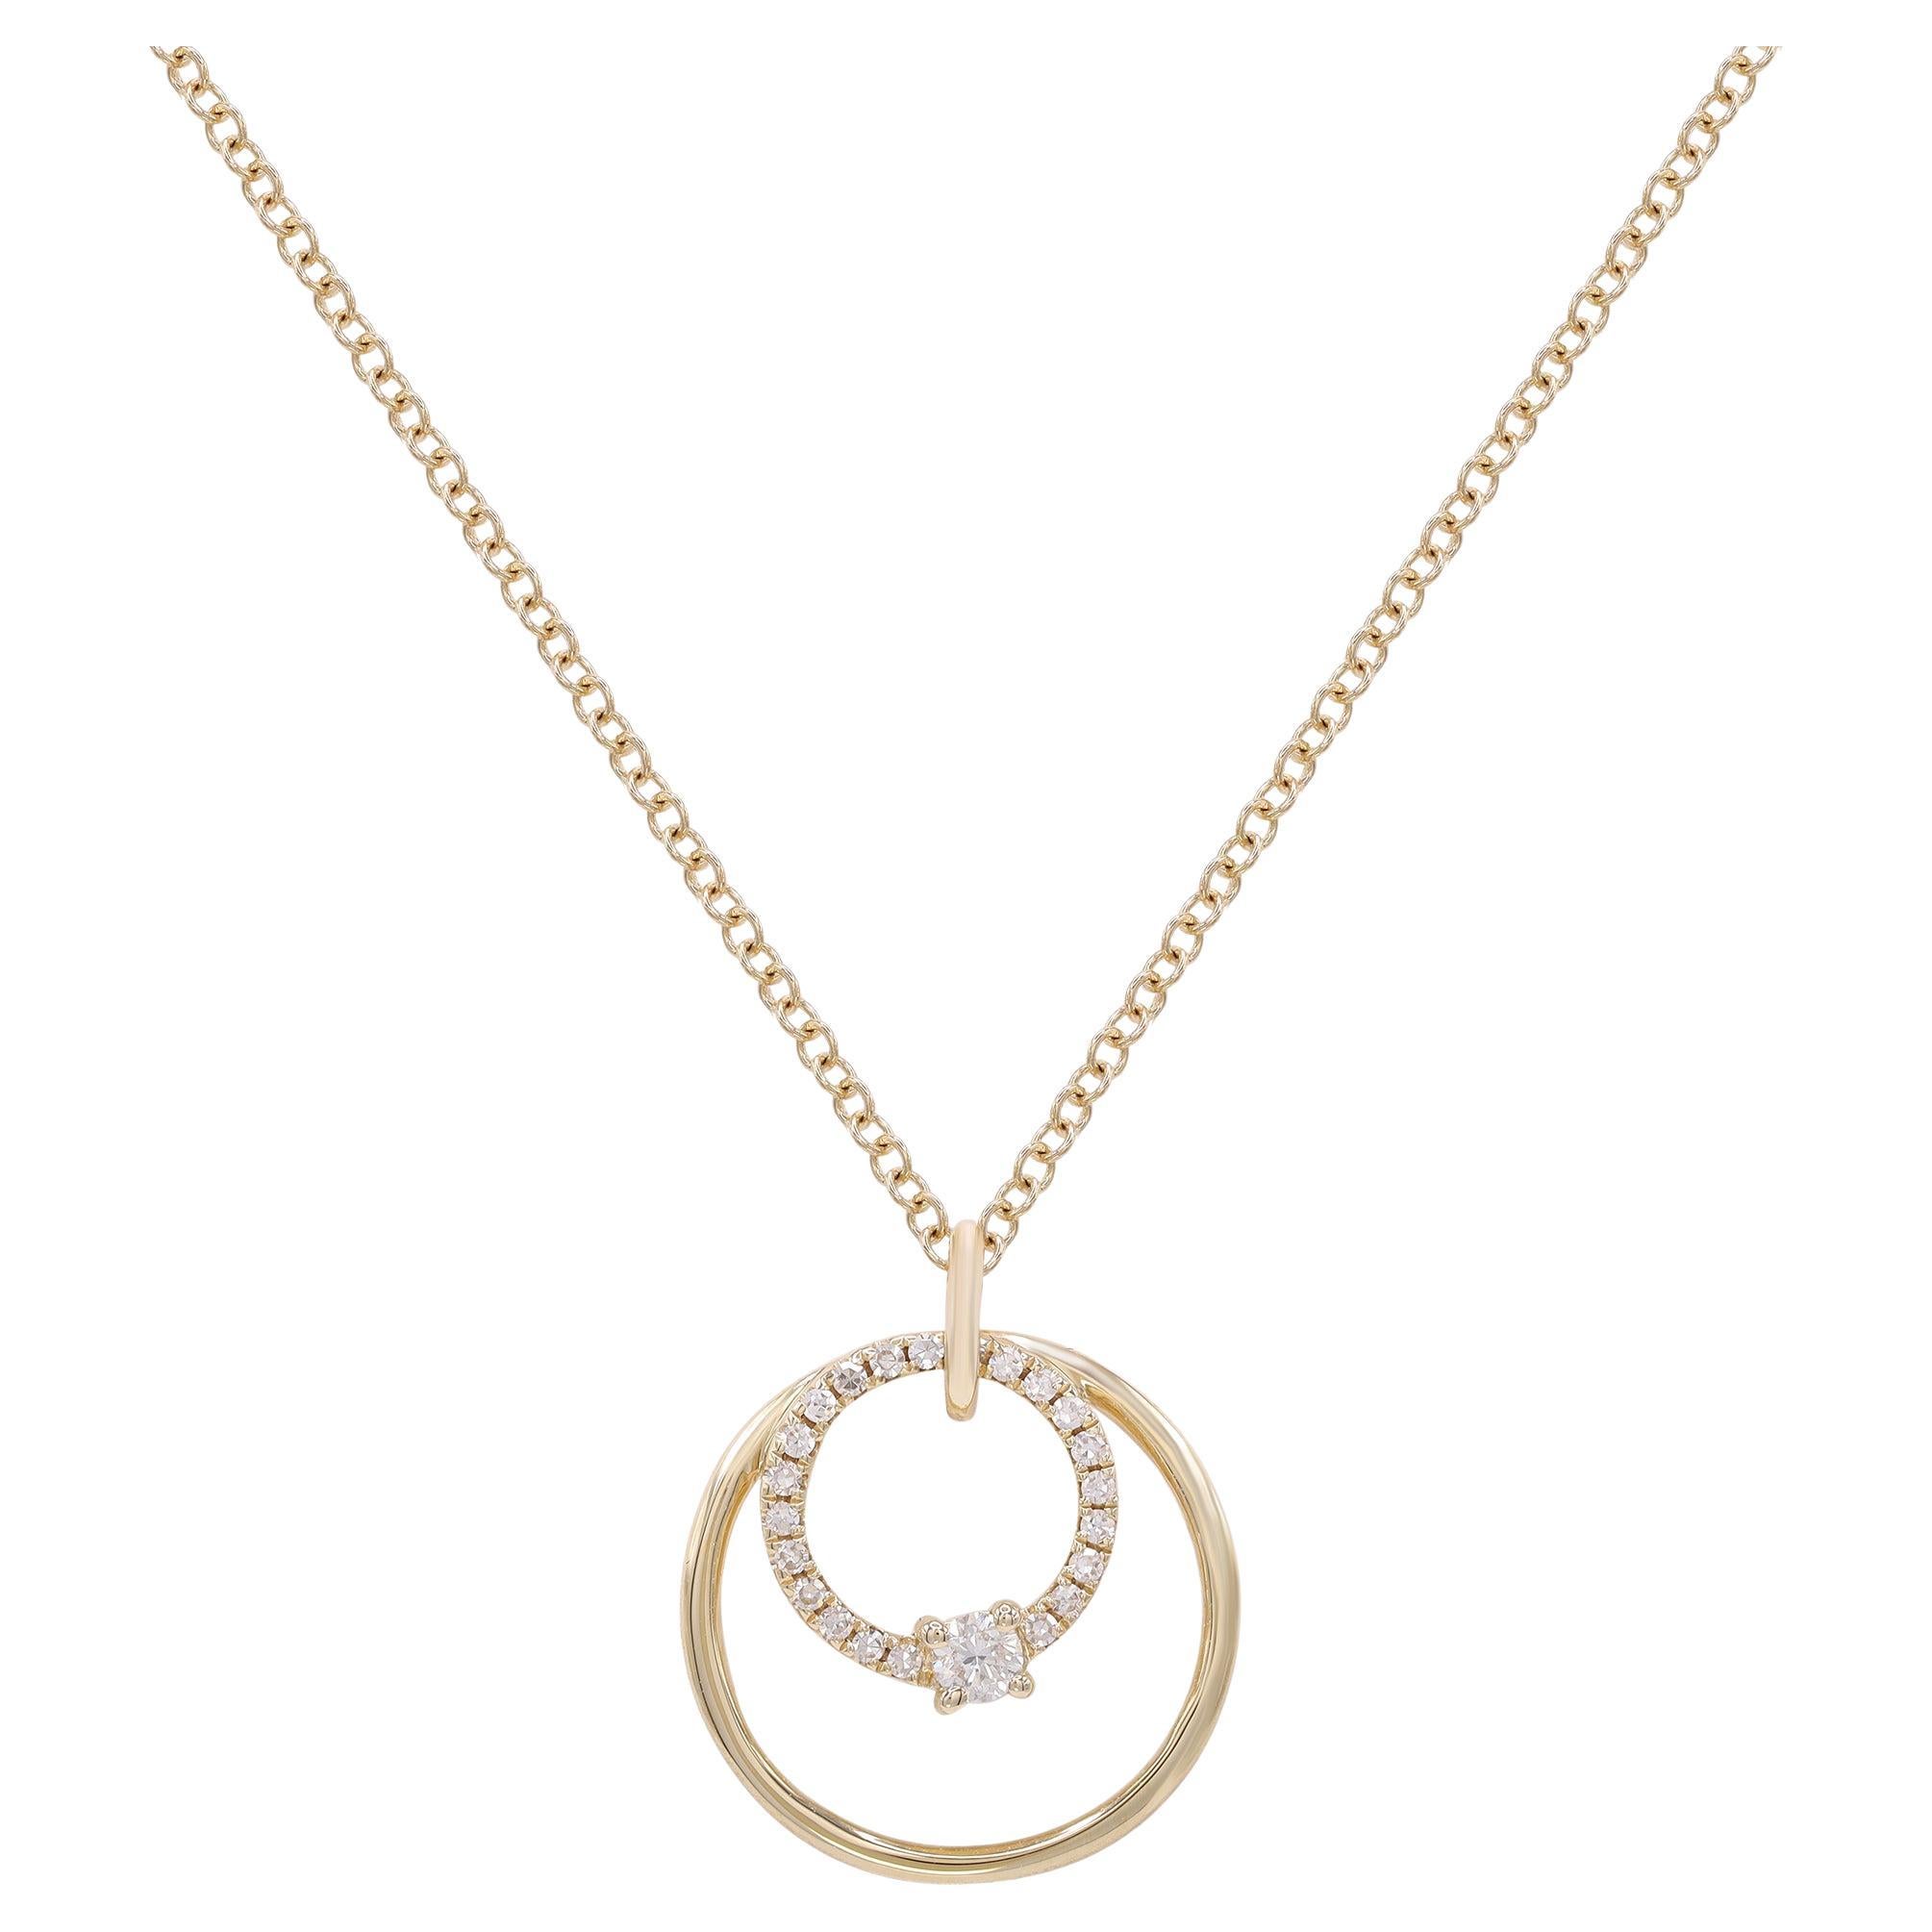 Rachel Koen Diamond Double Ring Pendant Necklace 14K Yellow Gold 0.11Cttw